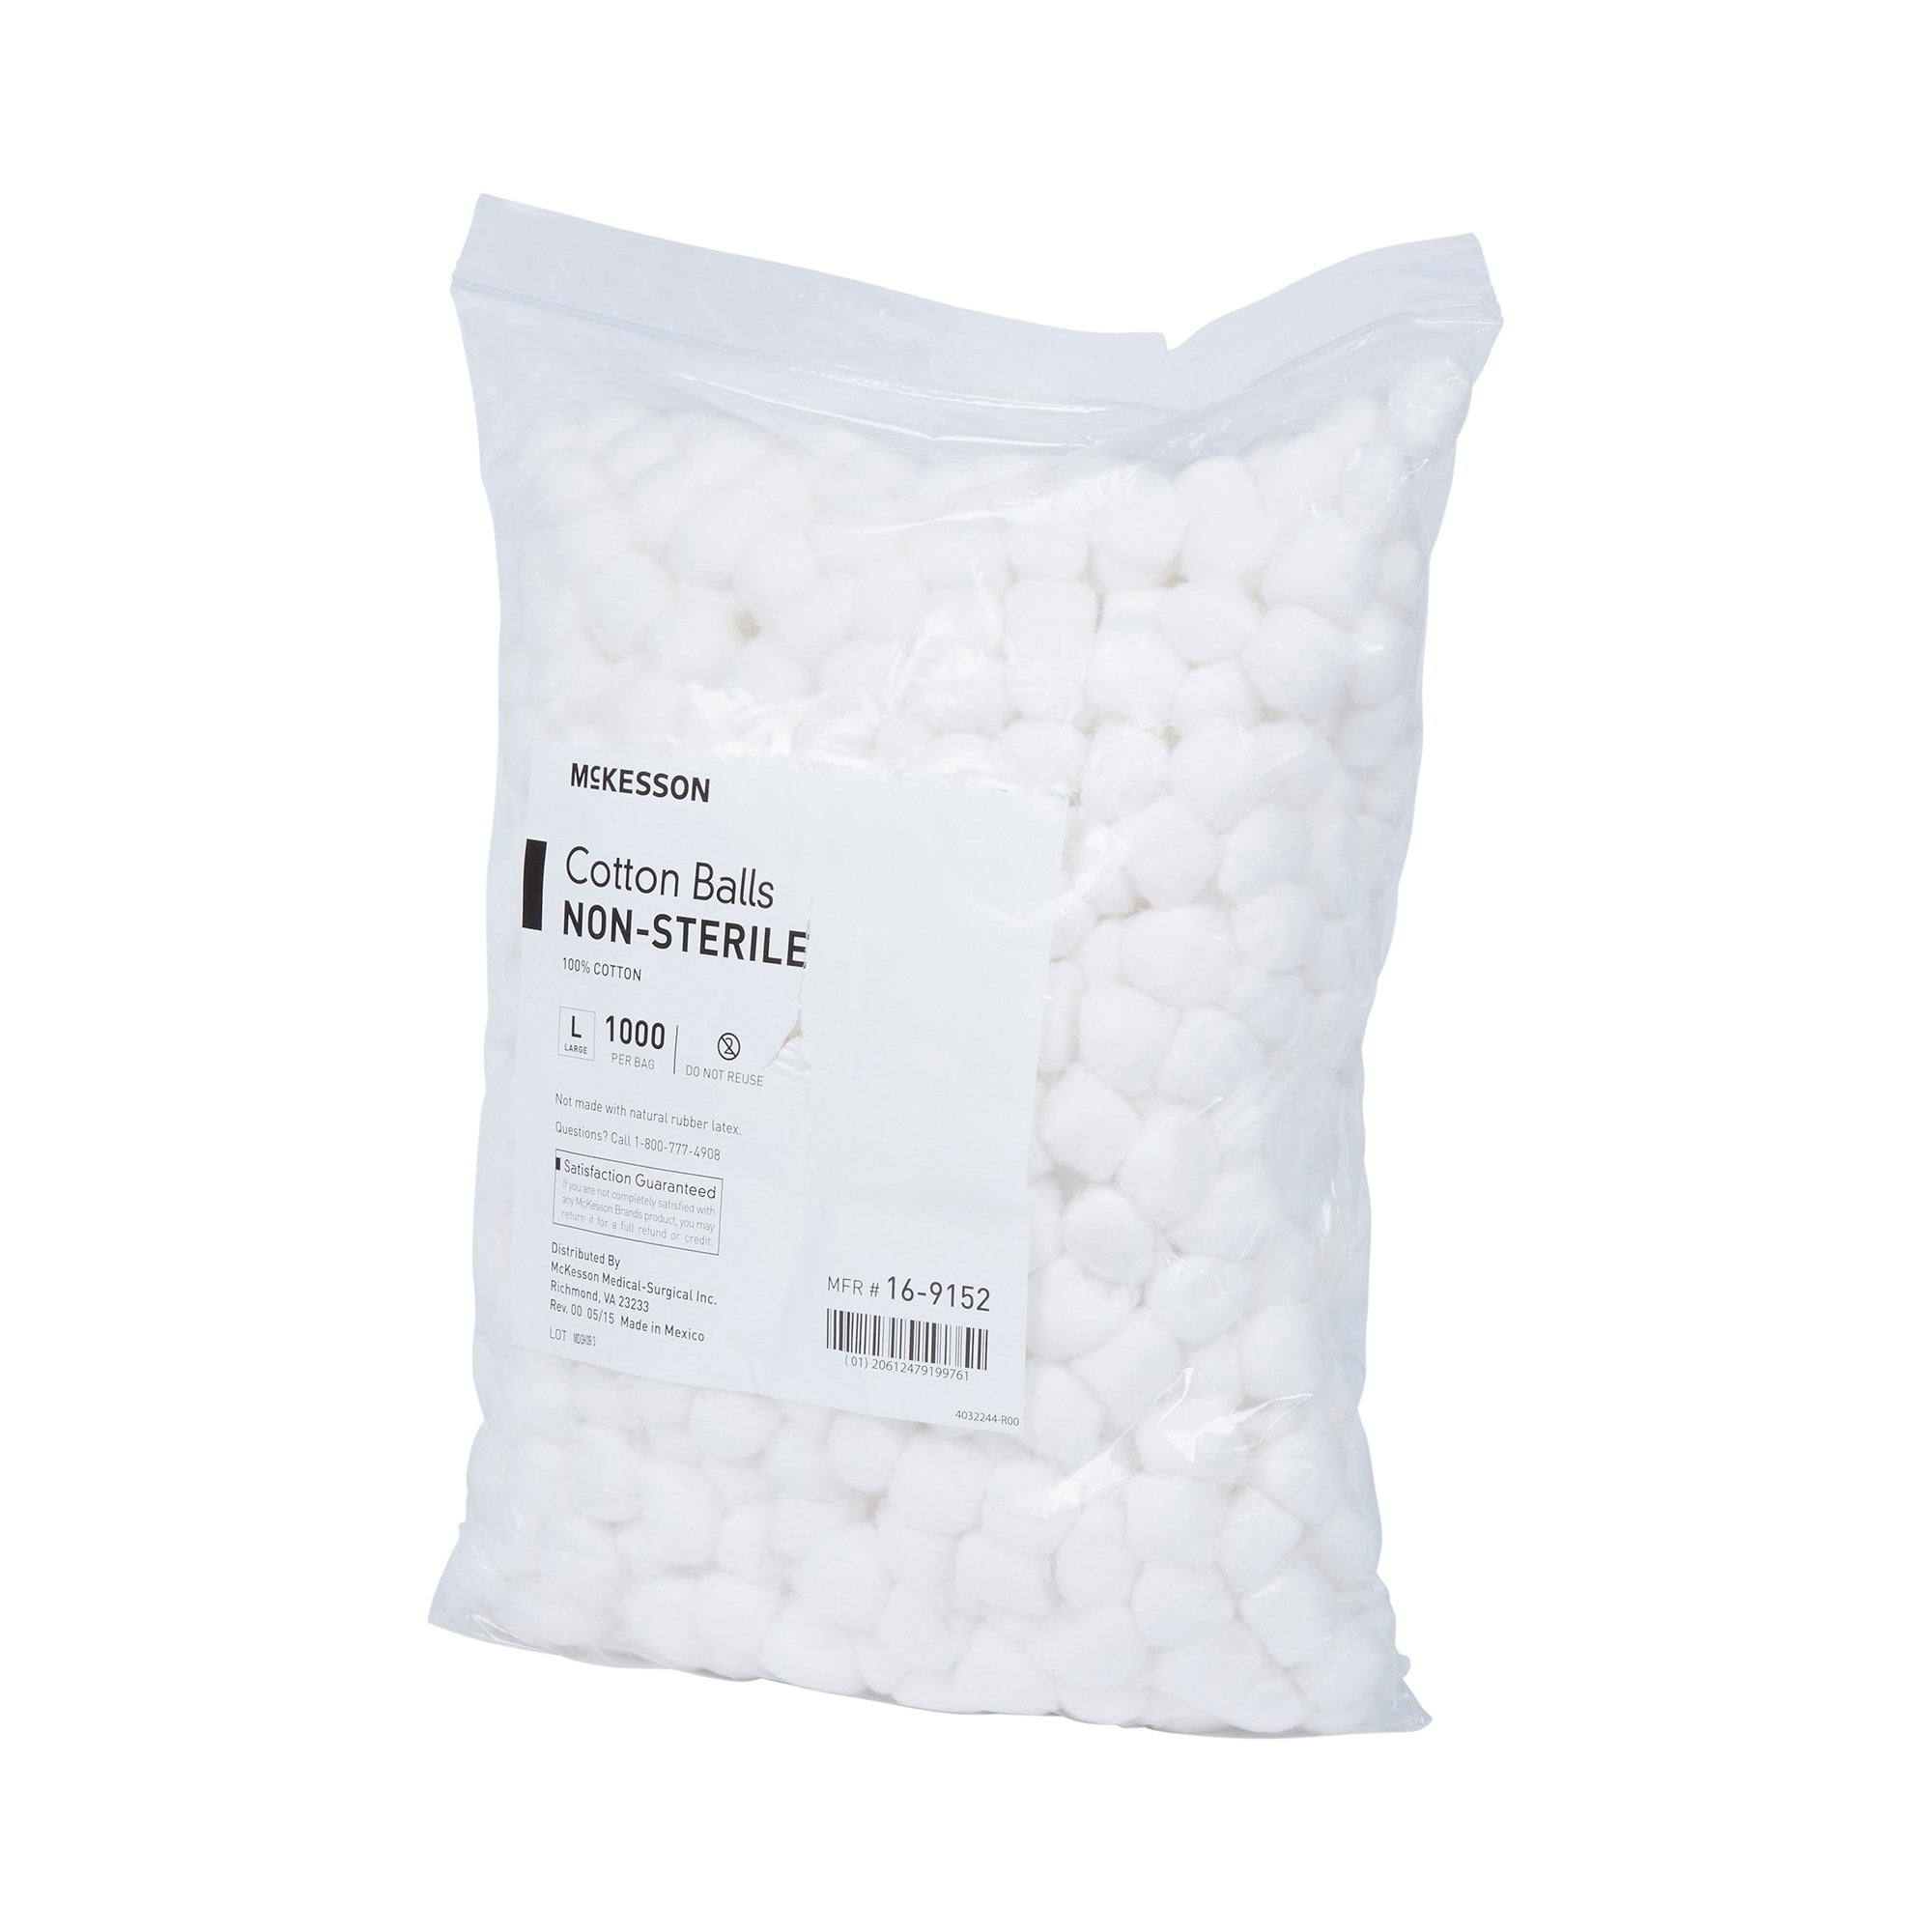 MEDLINE DYND73032 Sterile Cotton Balls Large (25/Box) - GB TECH USA